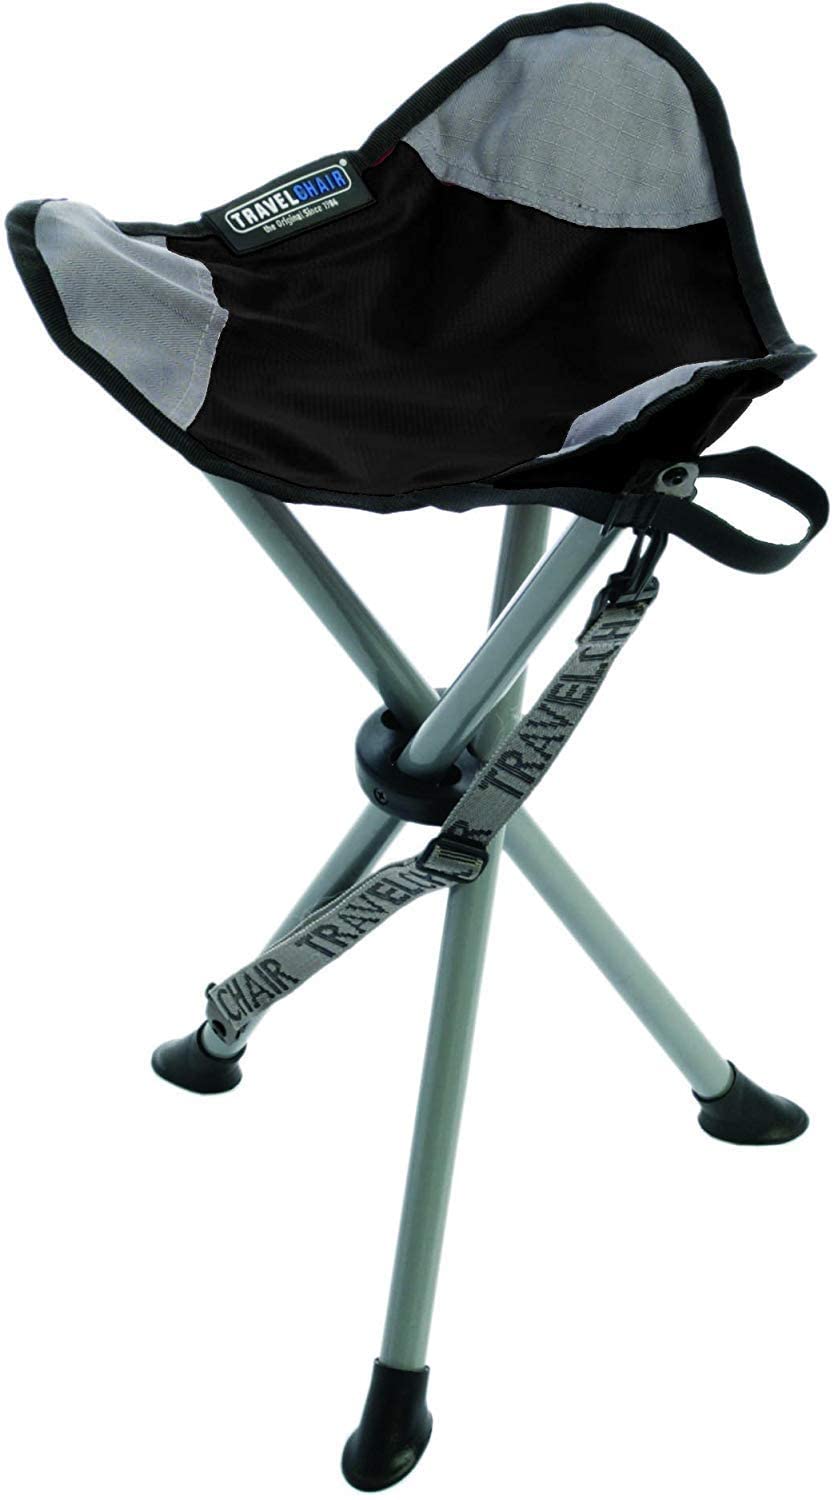 Travelchair Slacker Chair Render Cropped